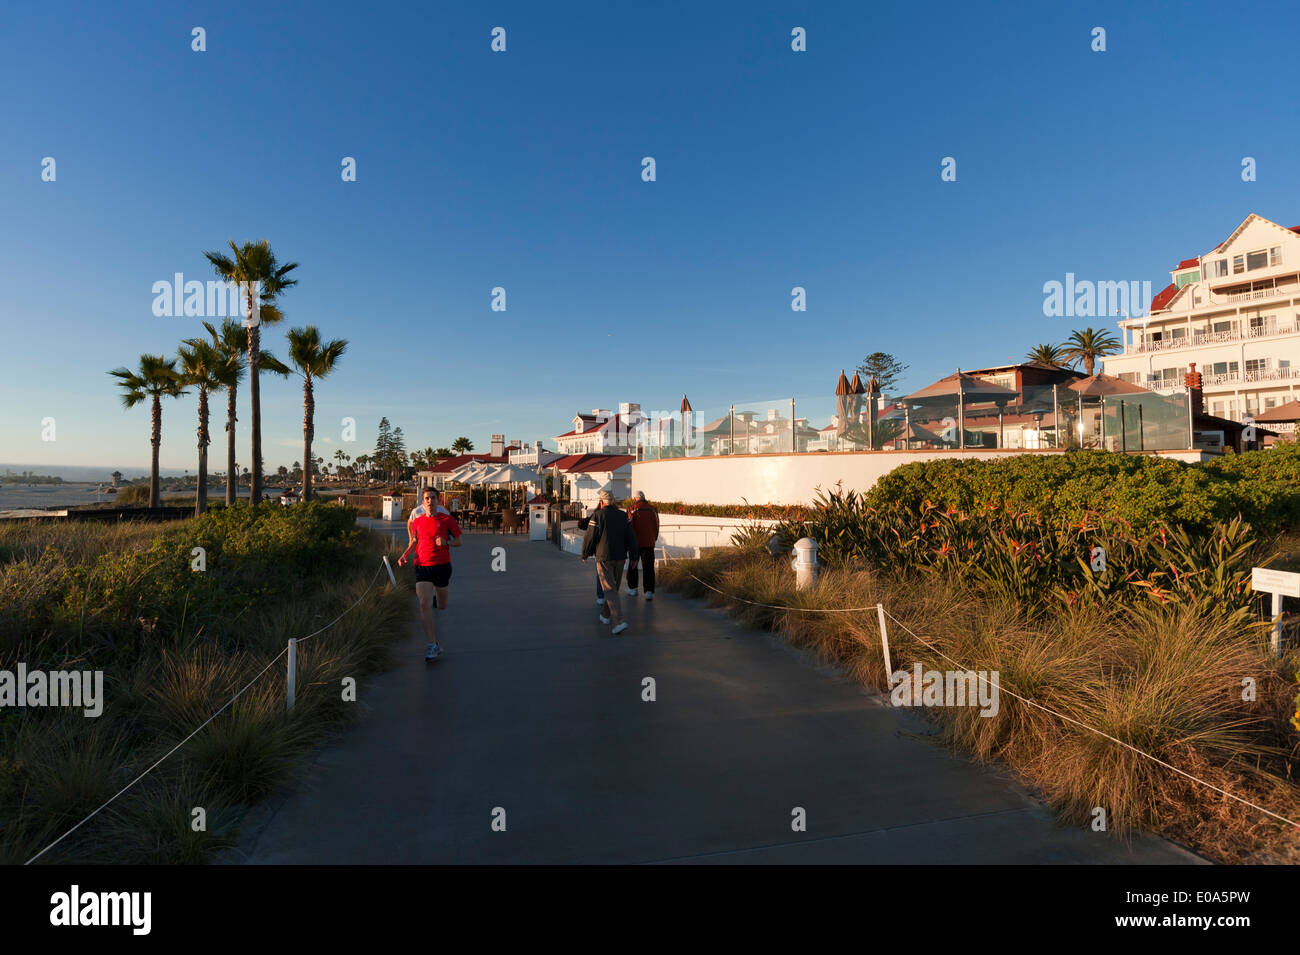 Coronado Island, San Diego, Californie, USA. Banque D'Images